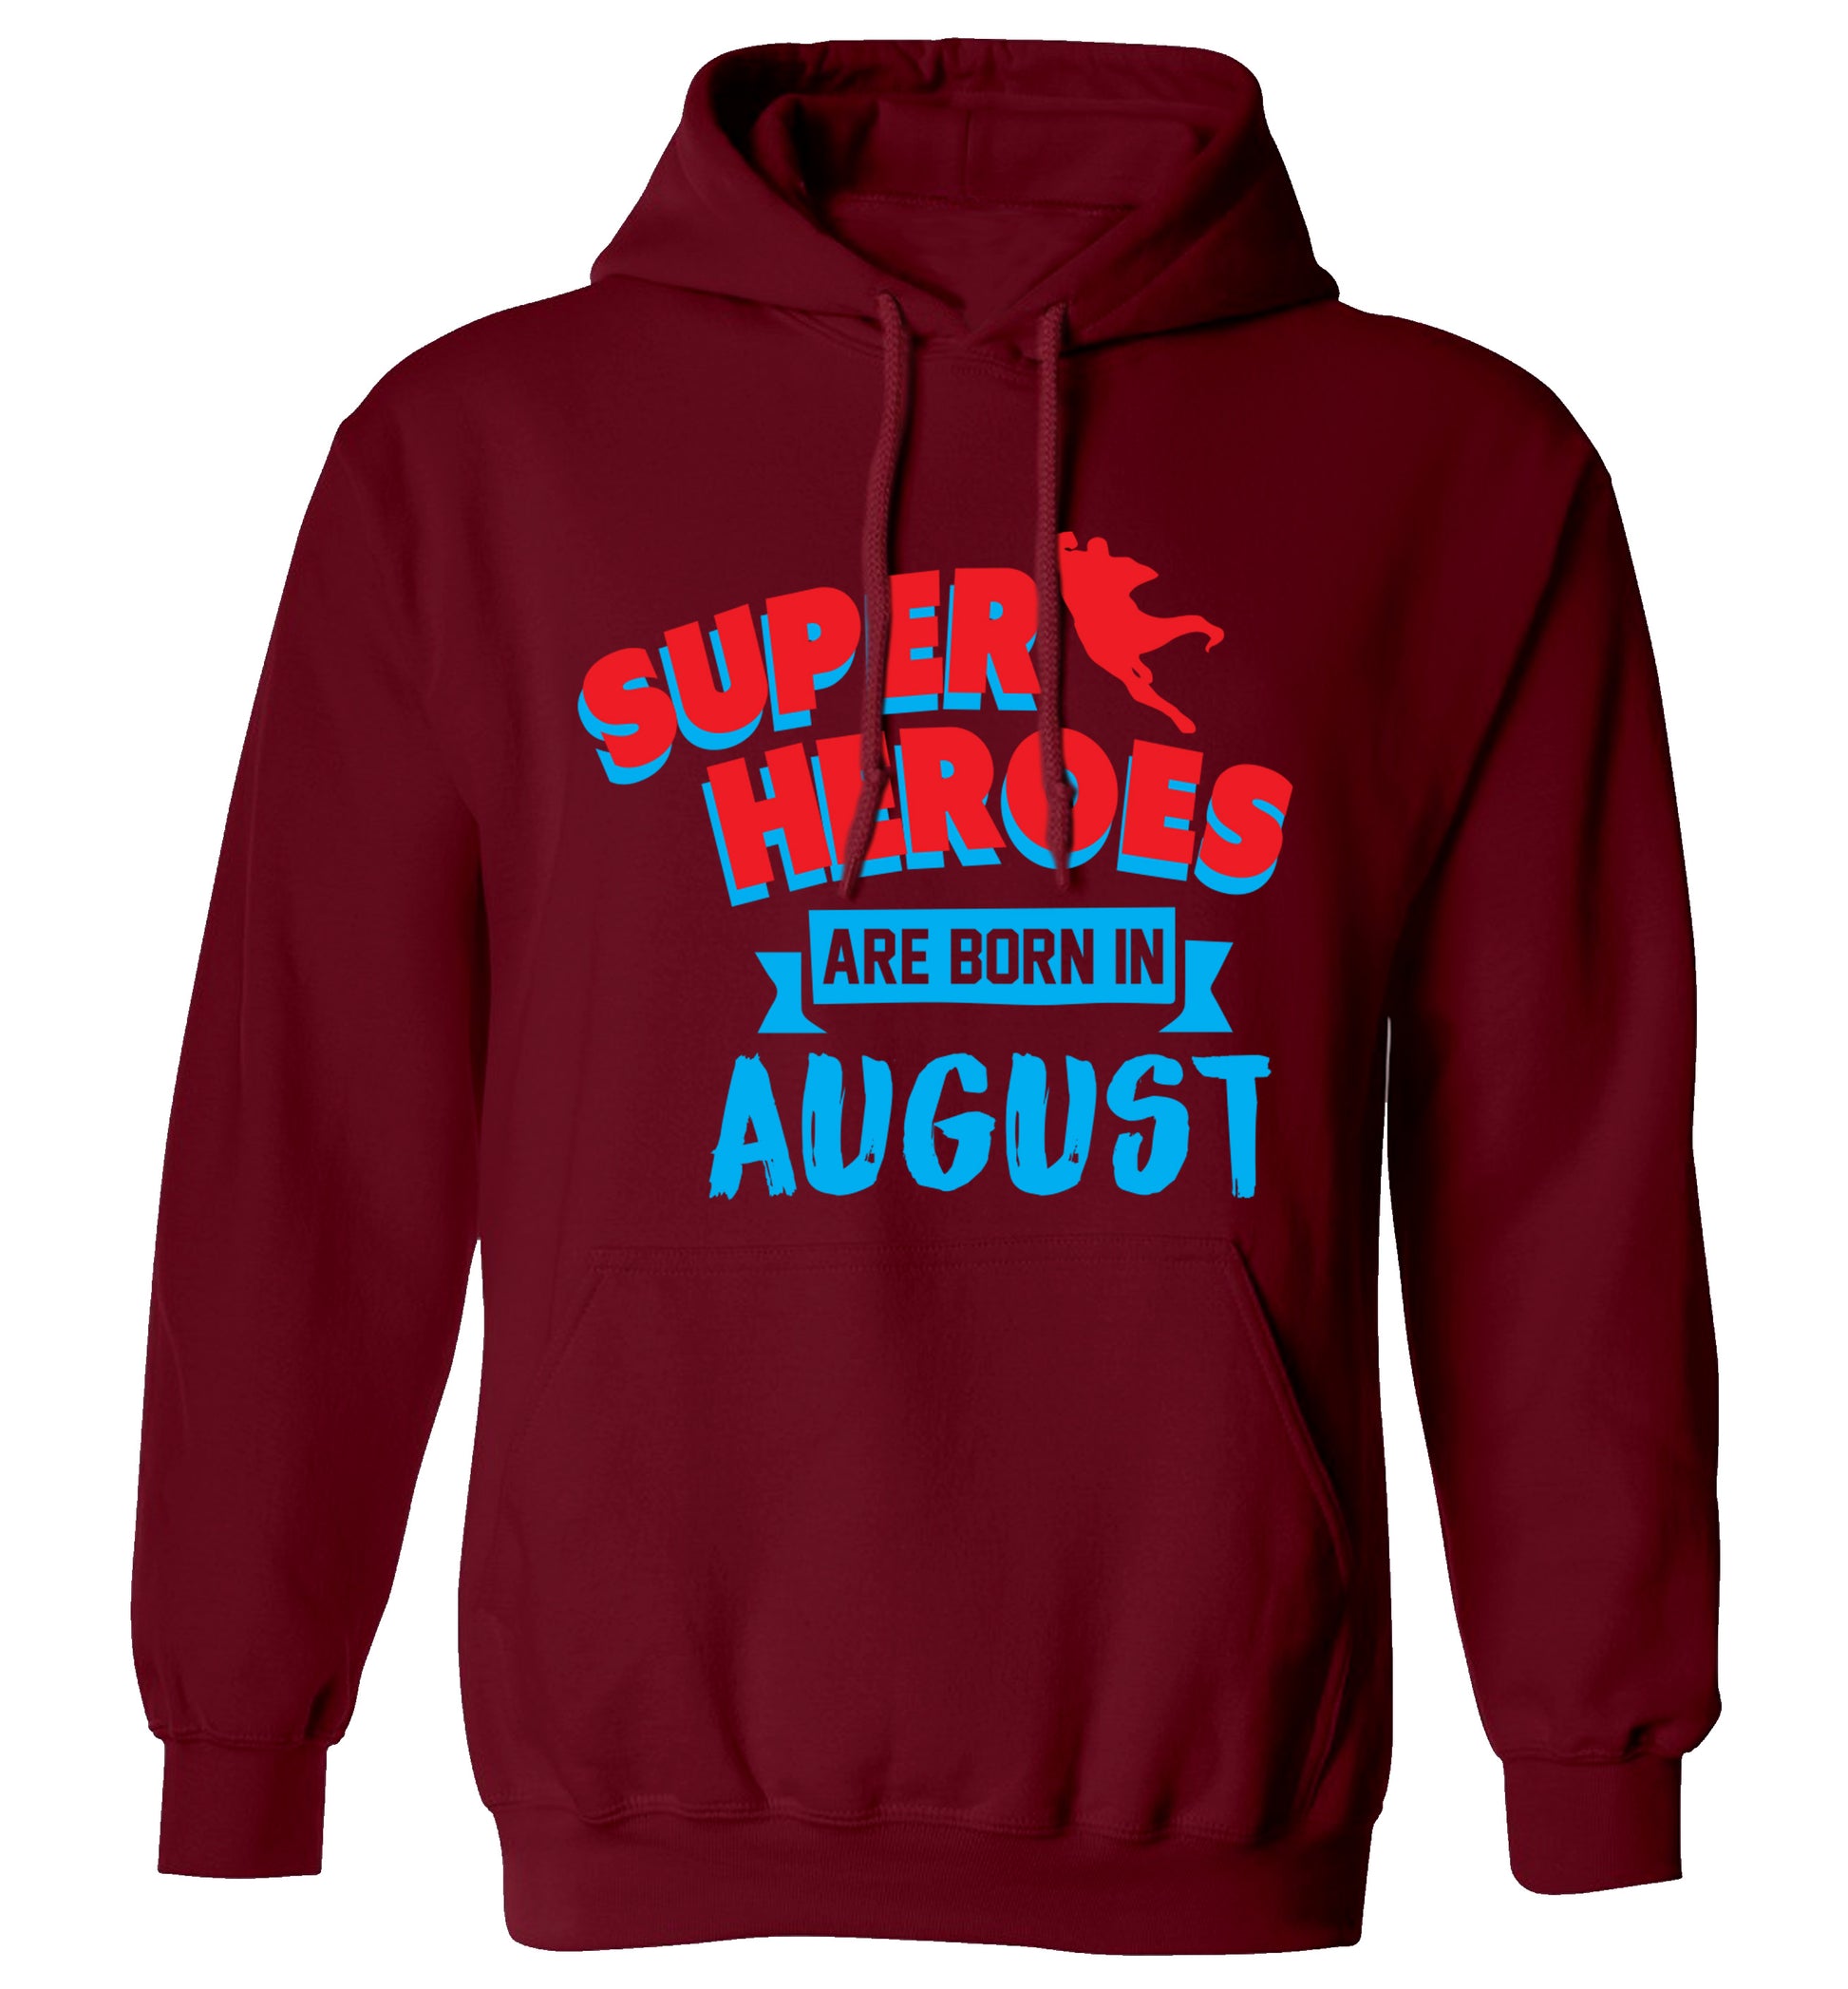 Superheroes are born in August adults unisex maroon hoodie 2XL